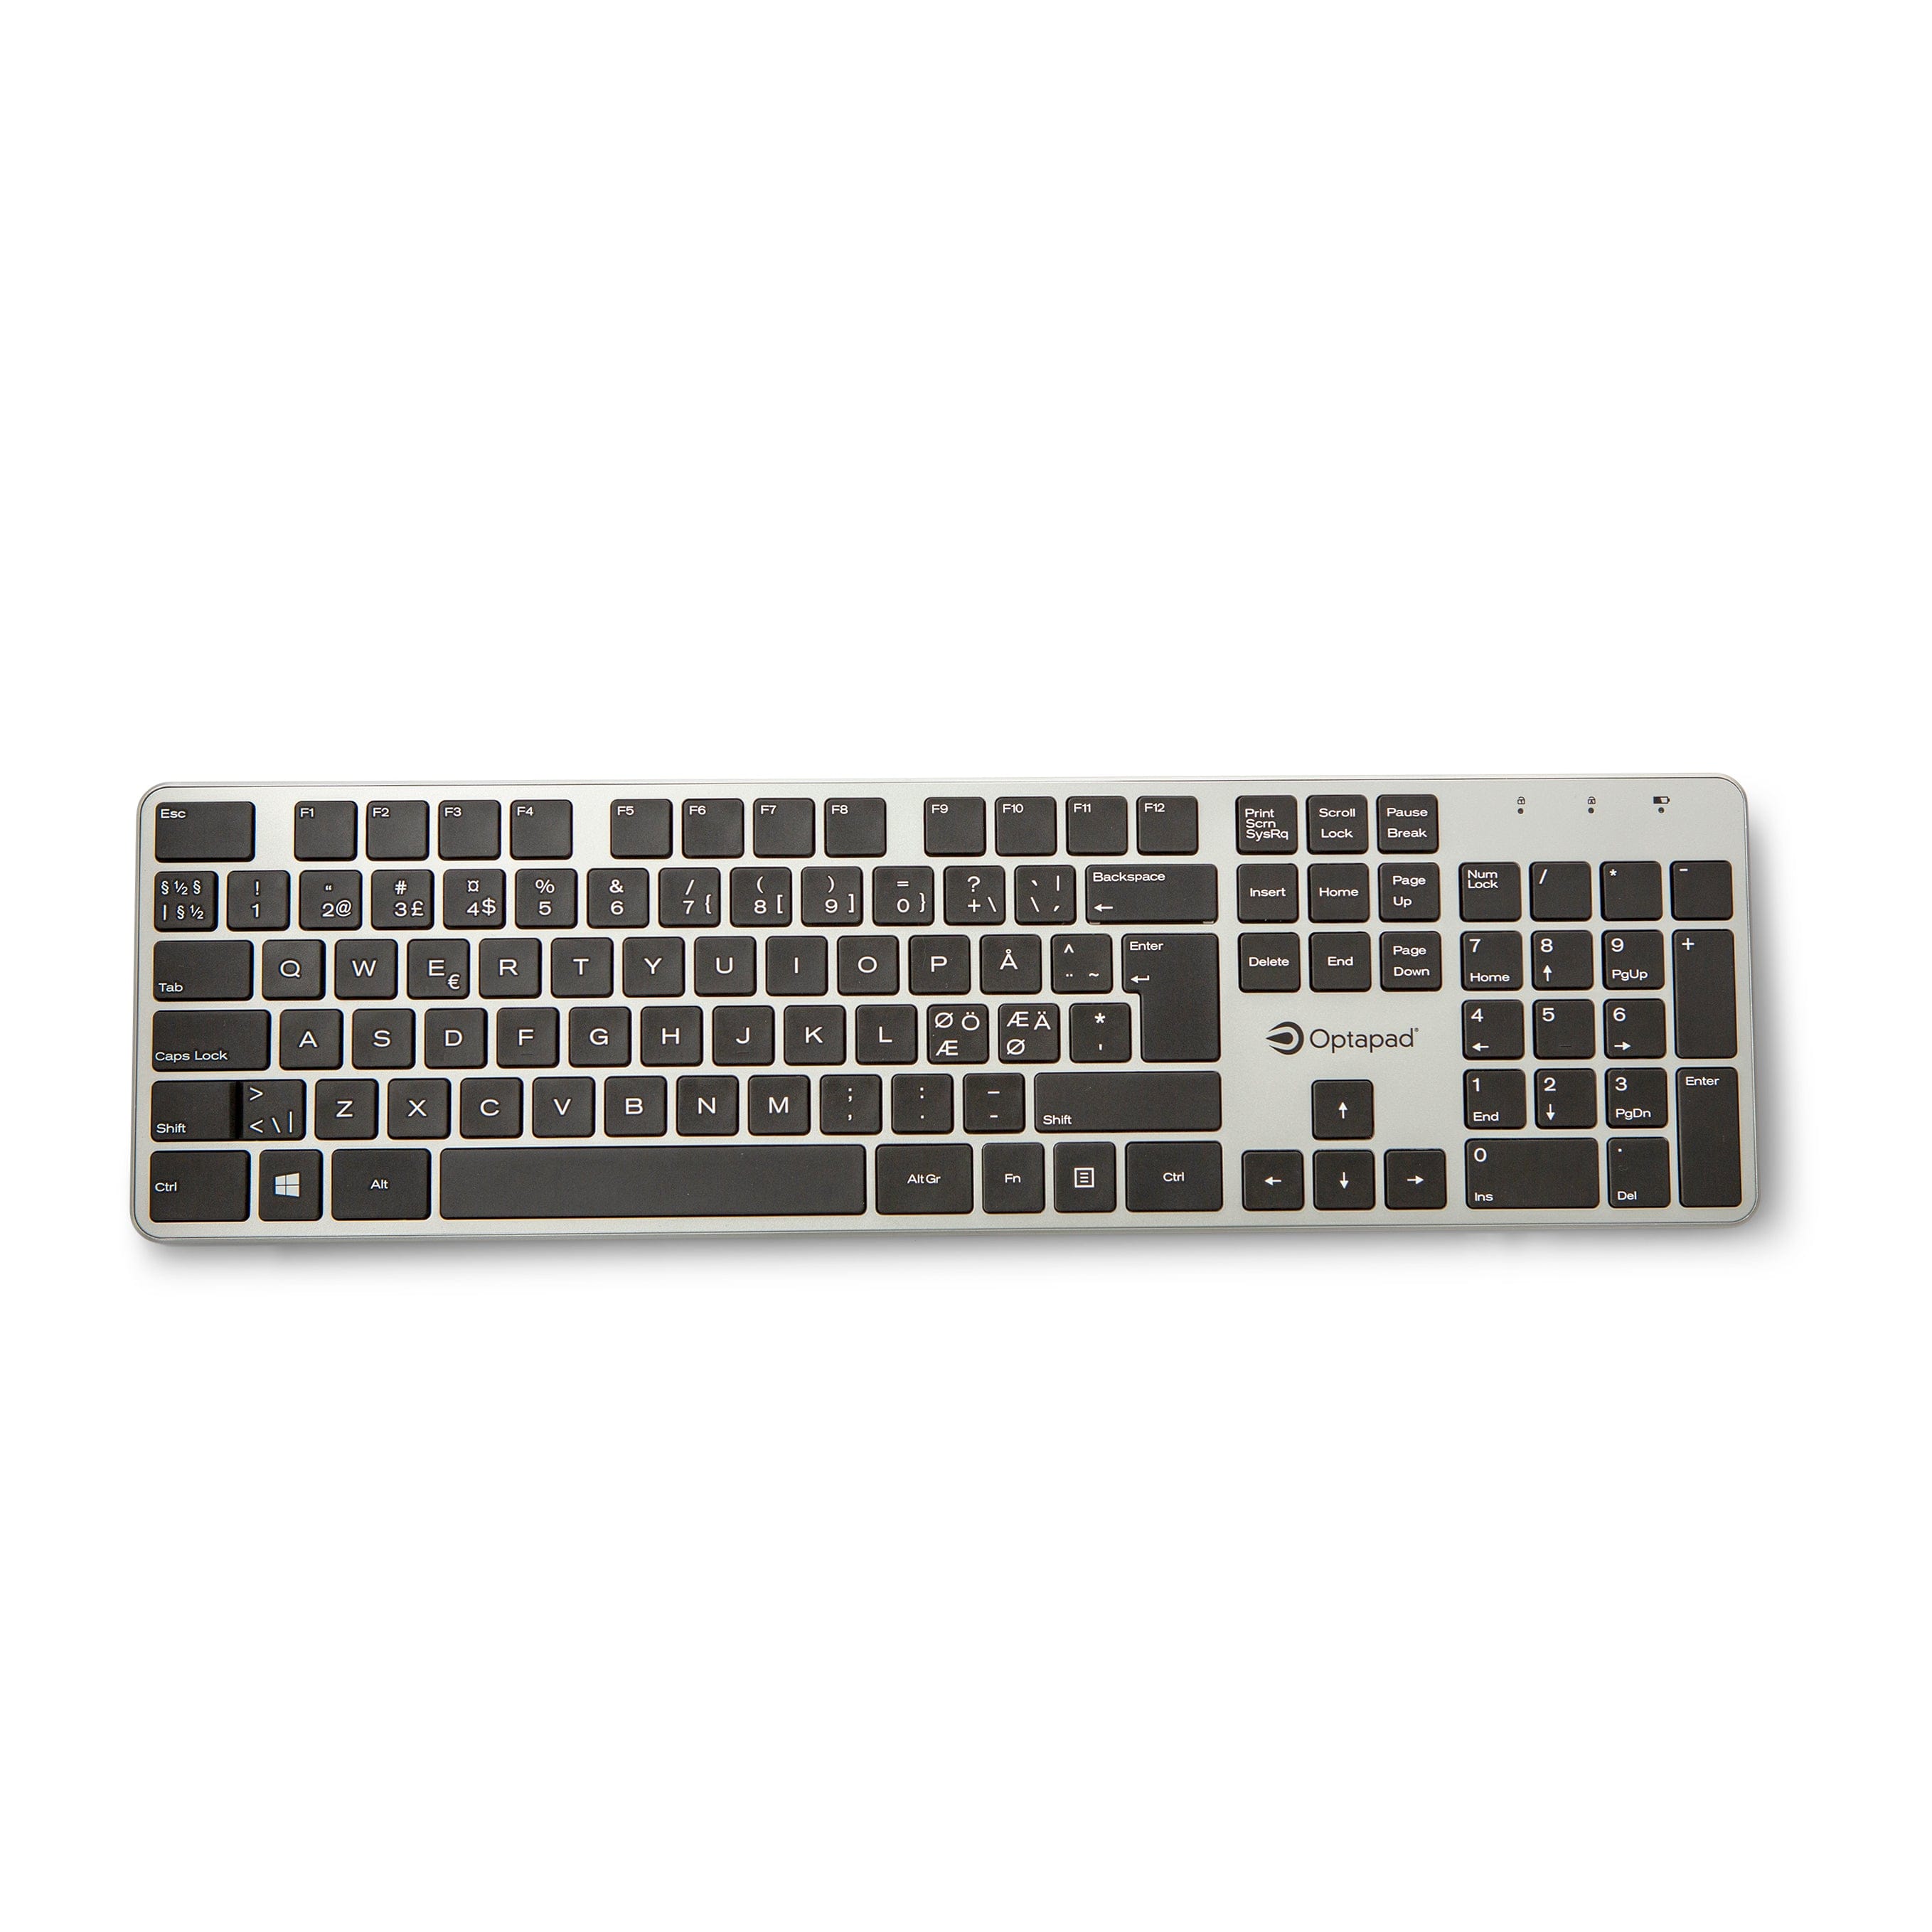  Optapad tangentbord (Trådlös) - hand-arm, mus-tangentbord, nacke-axlar, Tangentbord, Trådlösa tangentbord - ErgoFinland